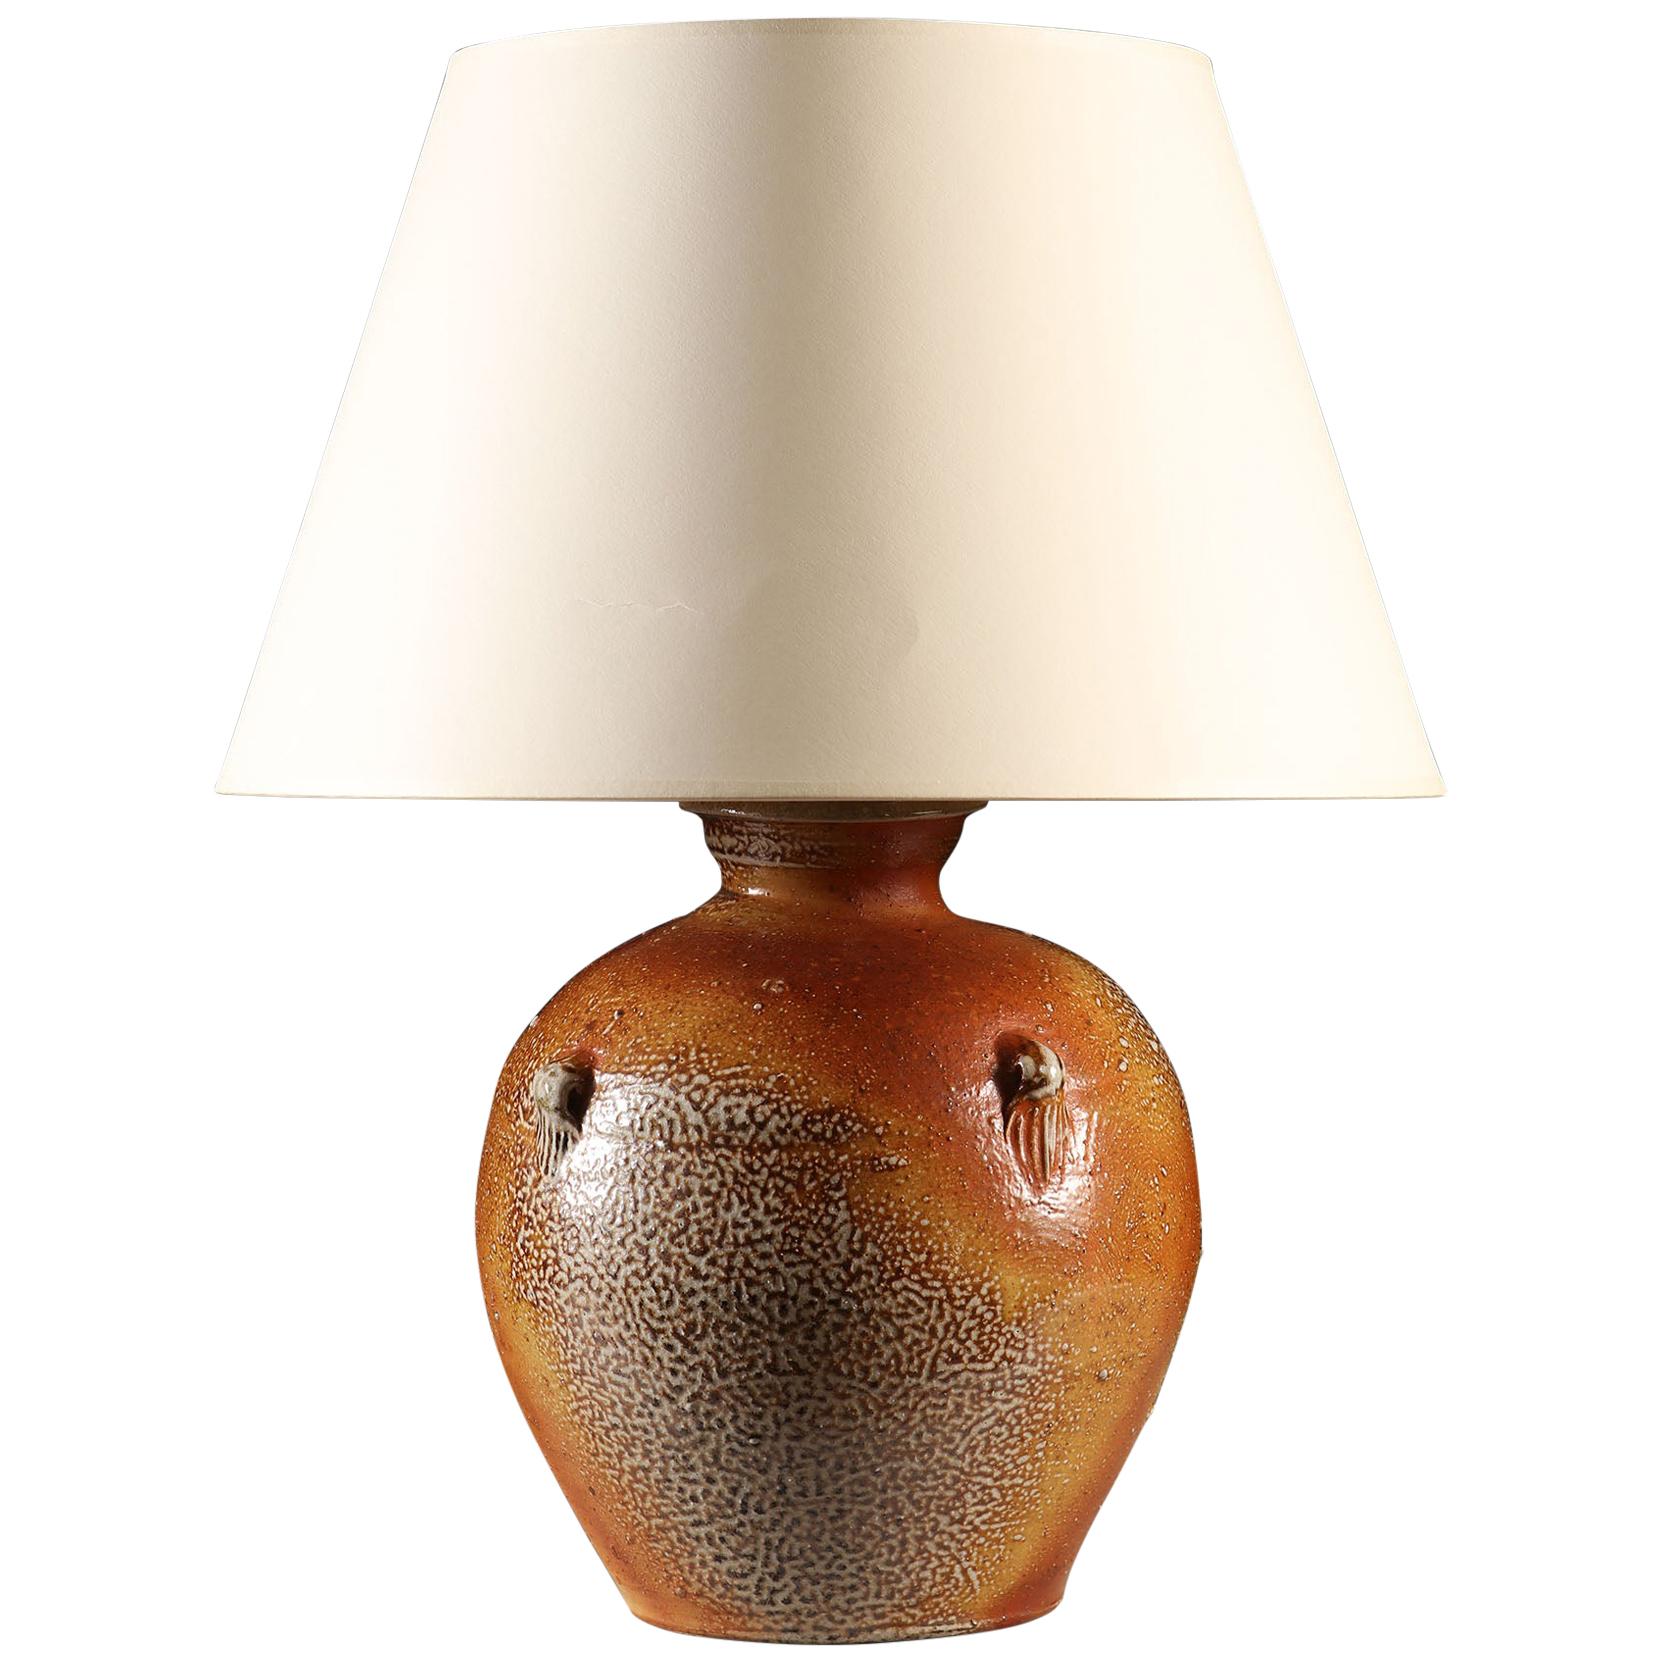 Salt Glazed Brown Terracotta Art Pottery Table Lamp Made in England